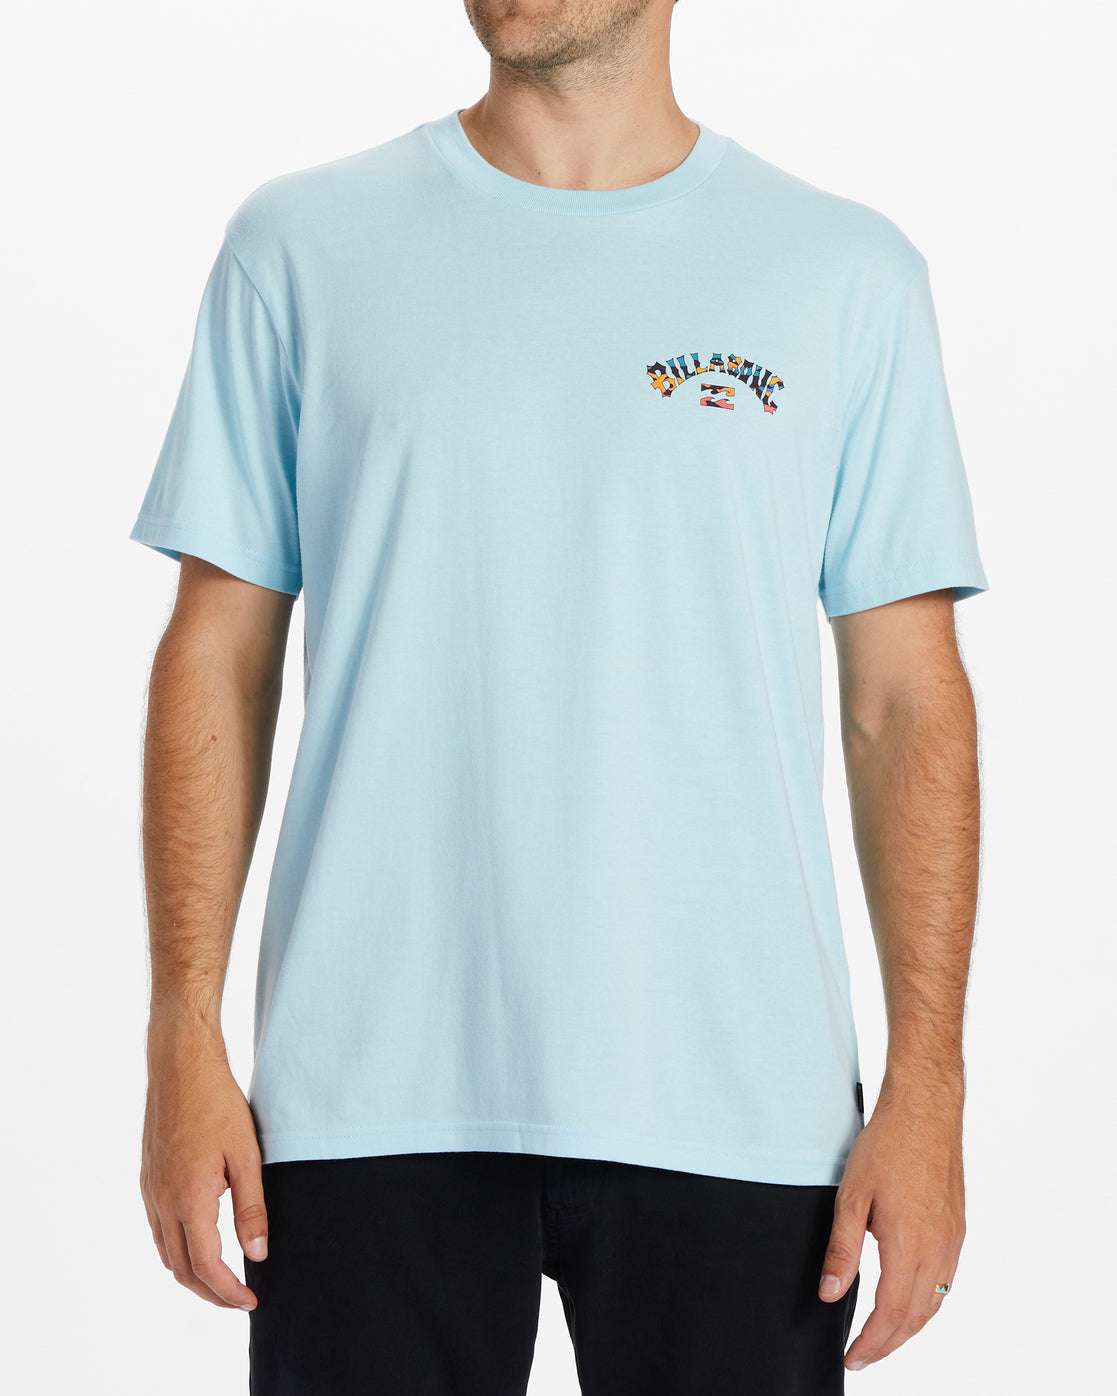 Camiseta Billabong Tienda En Linea - Exit Arch Short Sleeve Hombre Azules